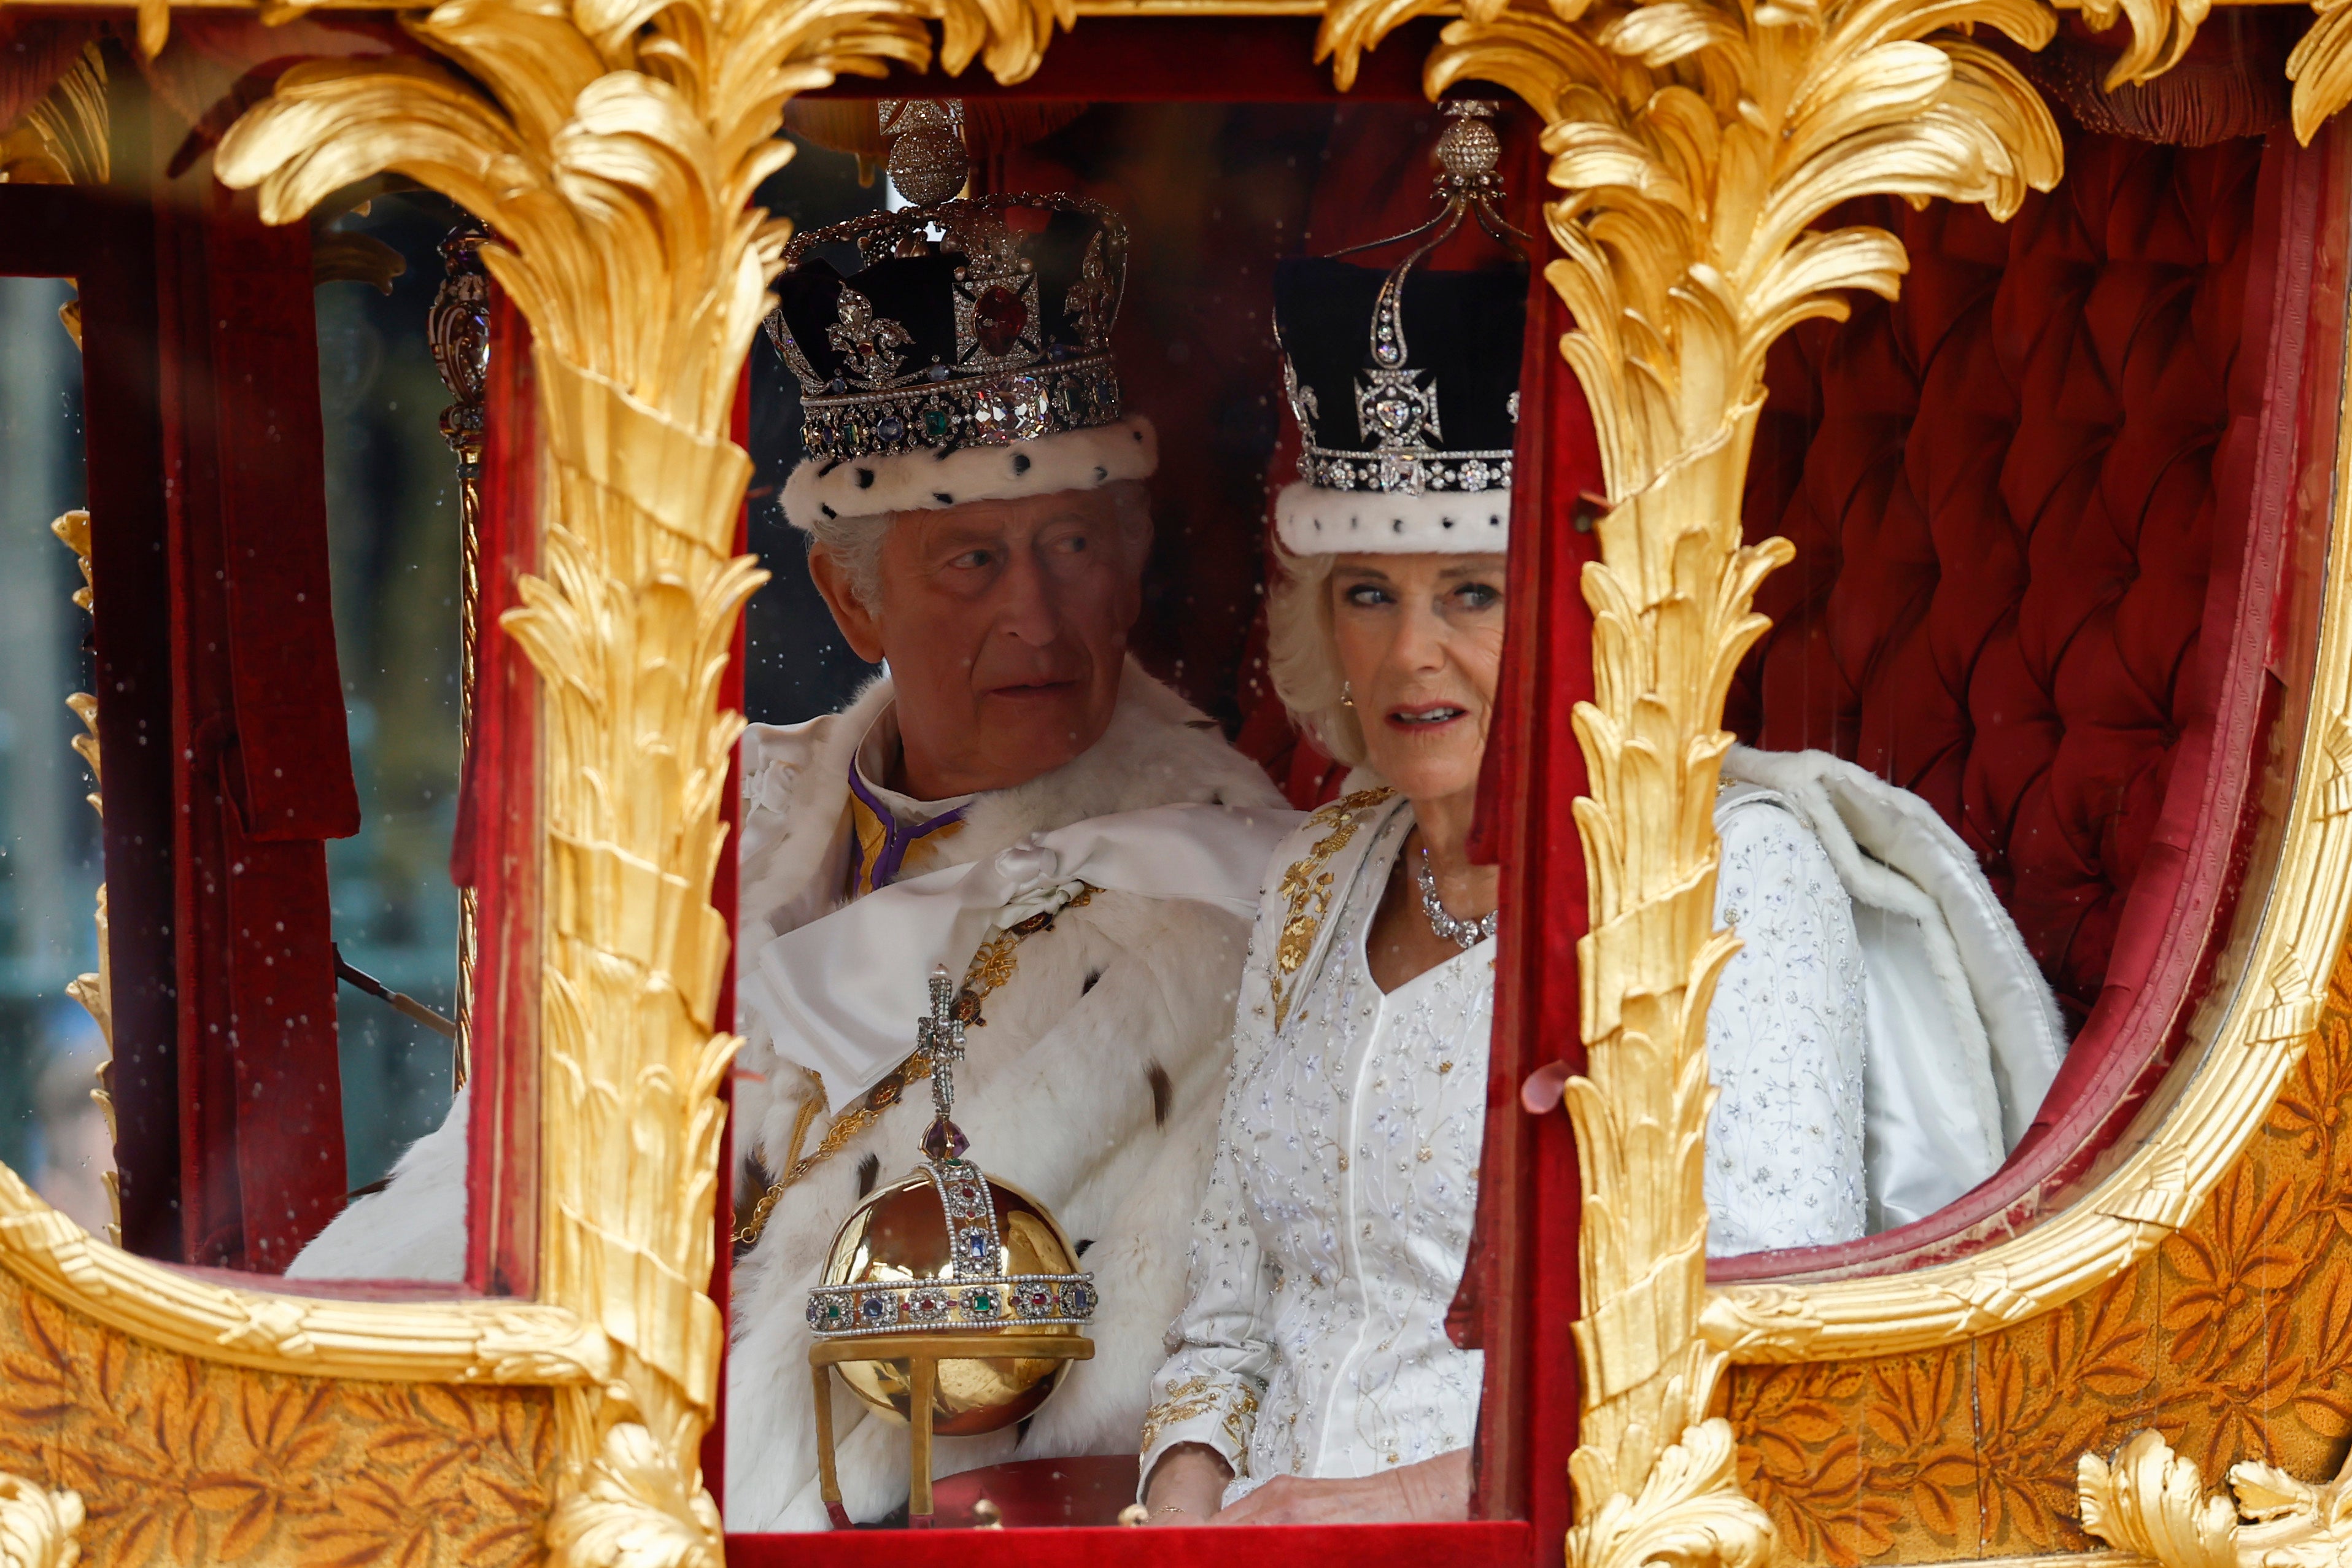 King Charles III was crowned on Saturday